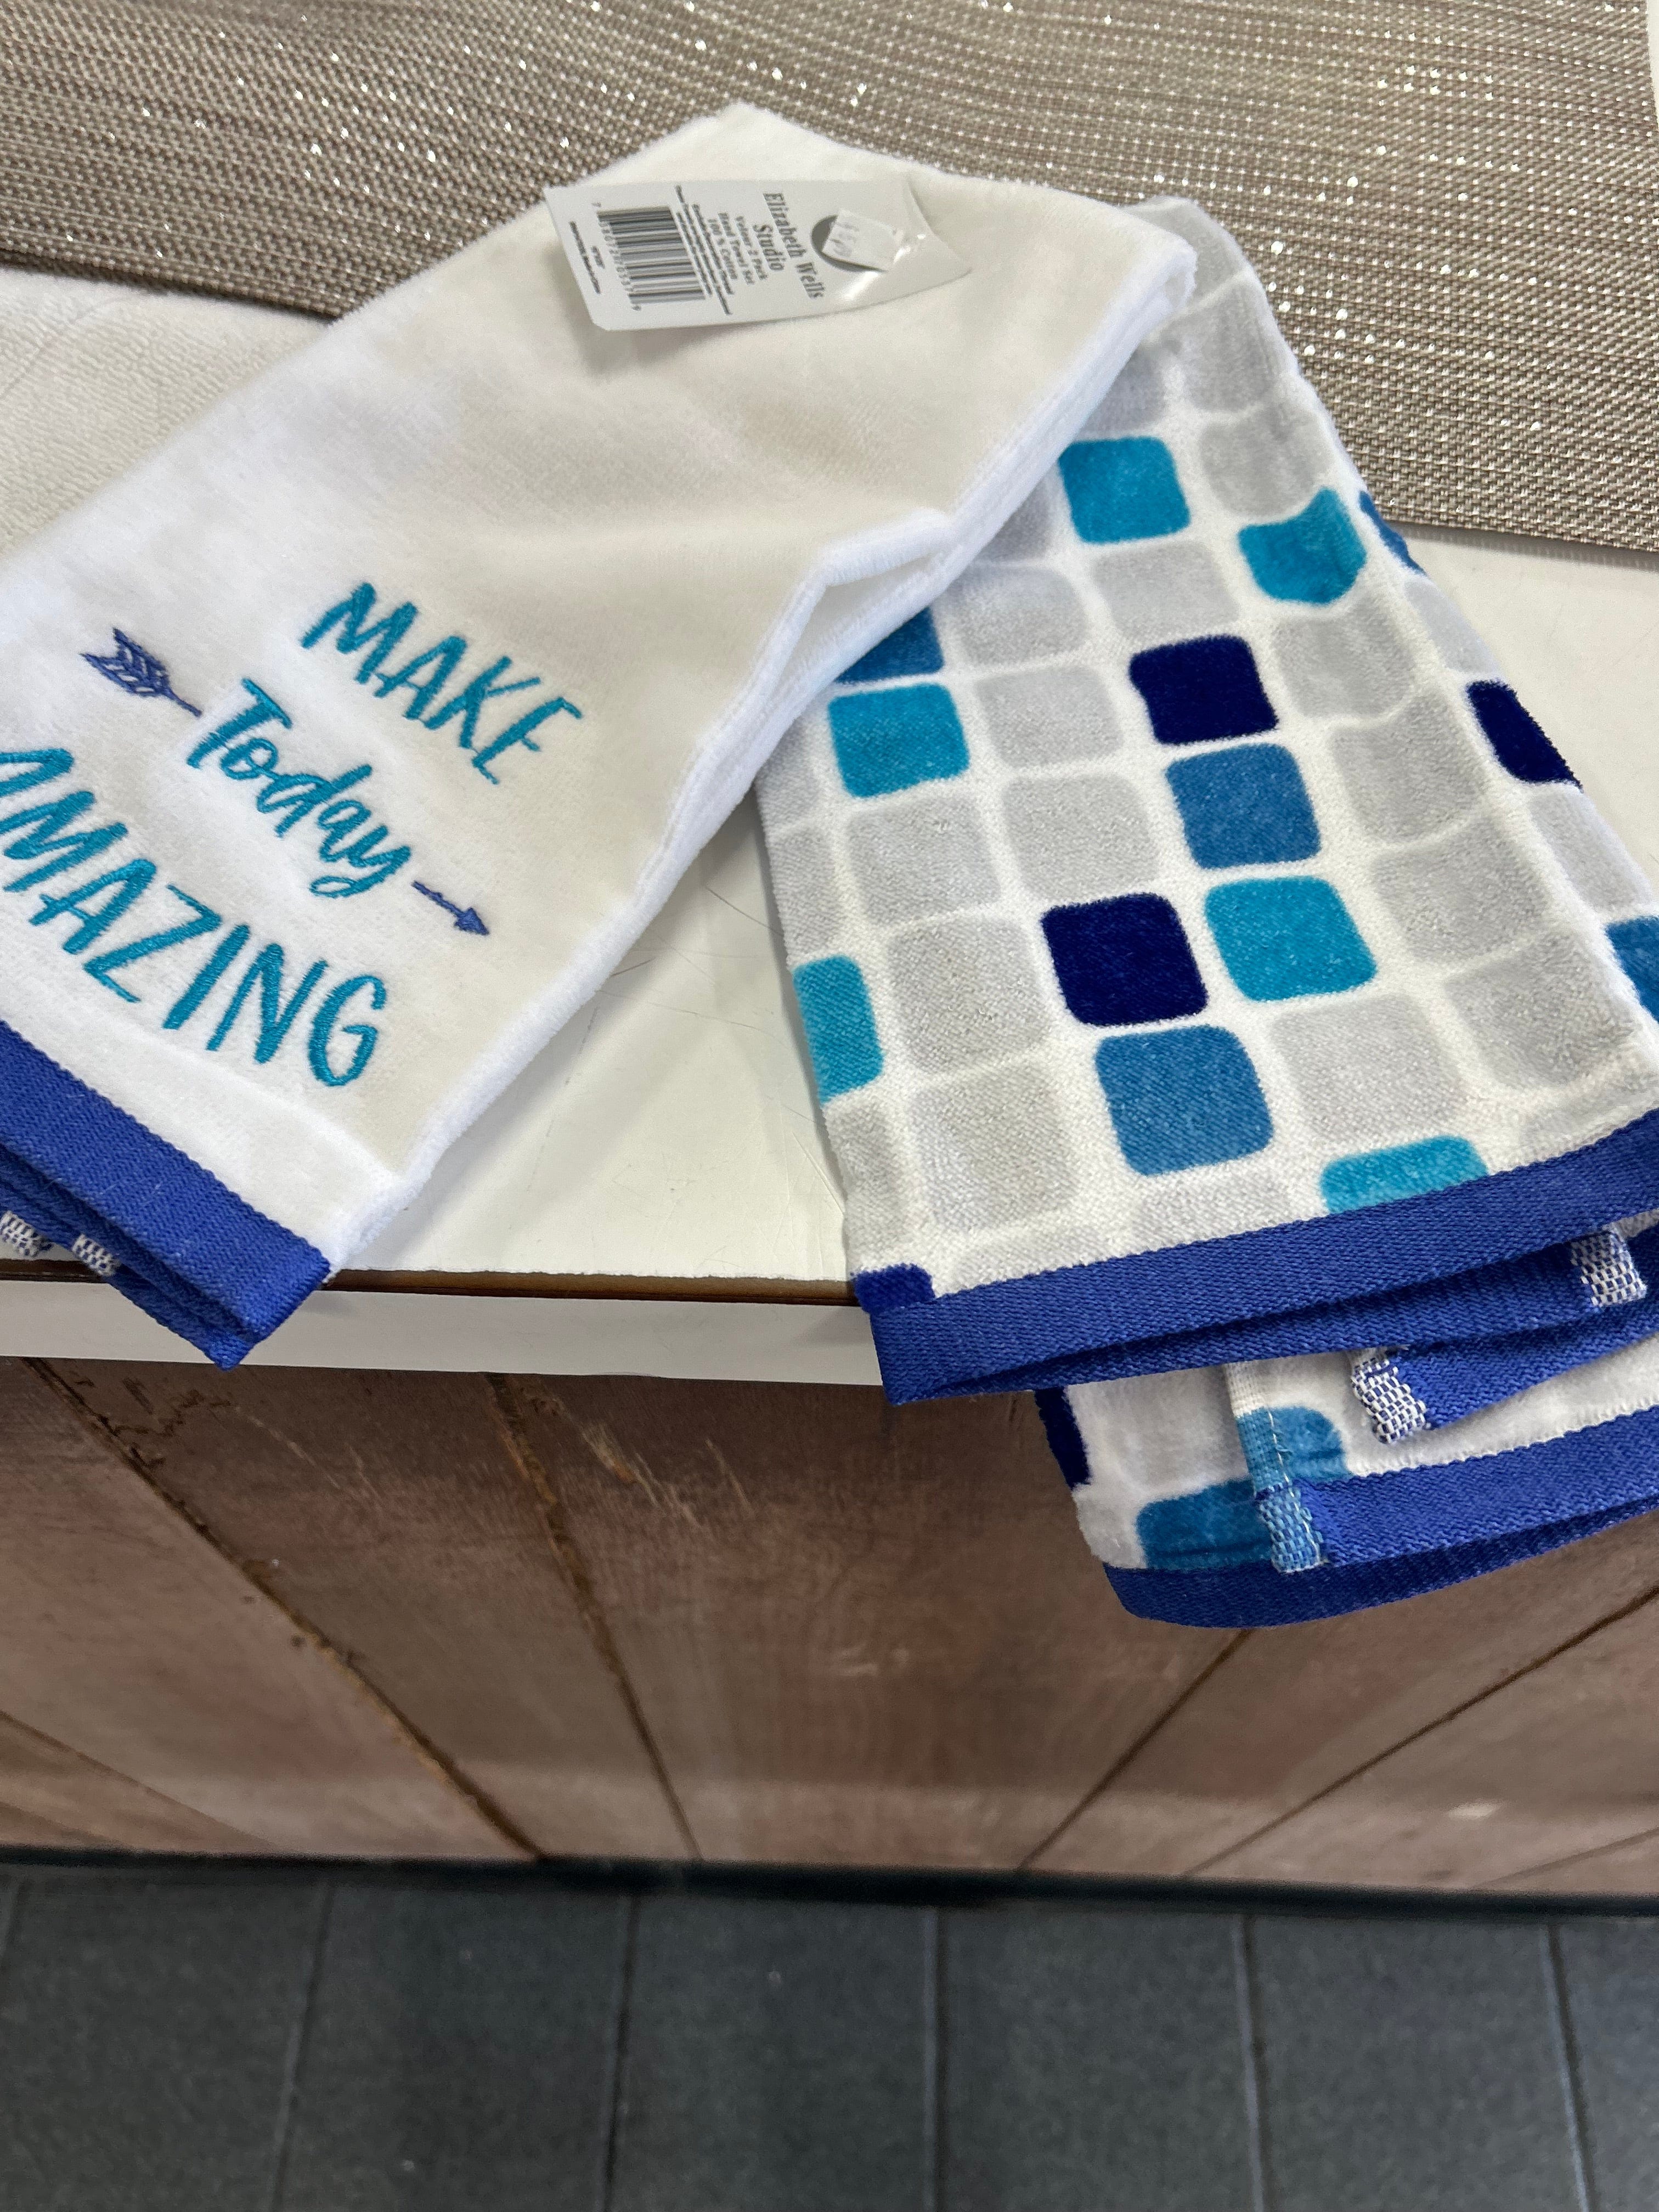 Linen World “Make Today Amazing” 2 PC VELOUR HAND TOWEL SET